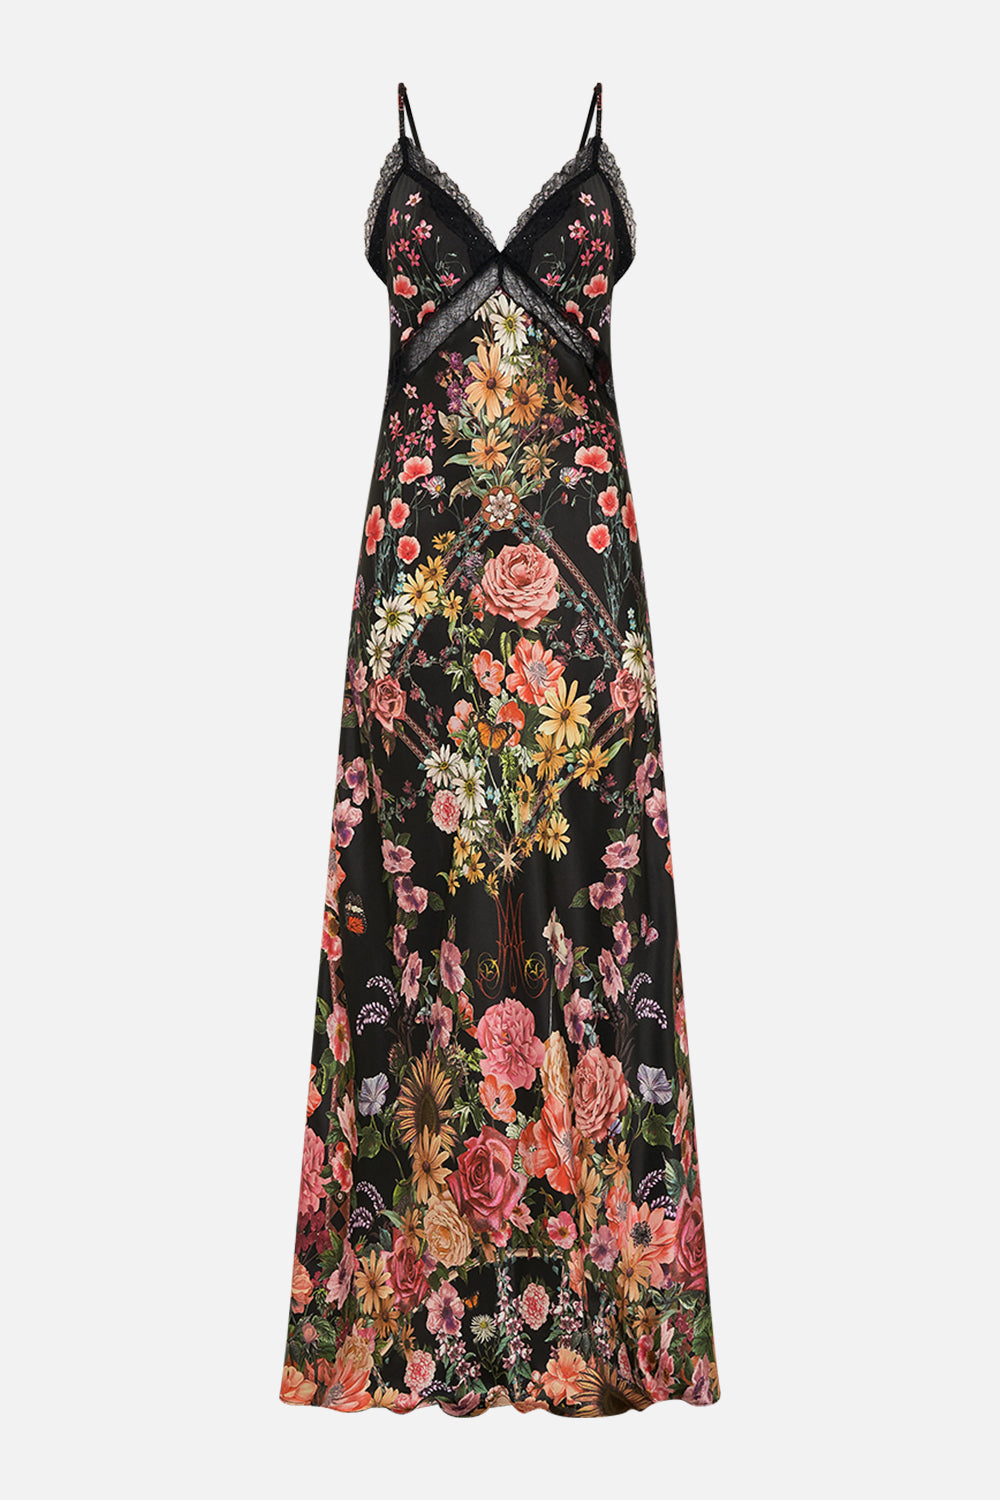 Lady 100% Cotton Slip Dress Long Lace Camis Full Slips Petticoat Long Tank  Dress | eBay